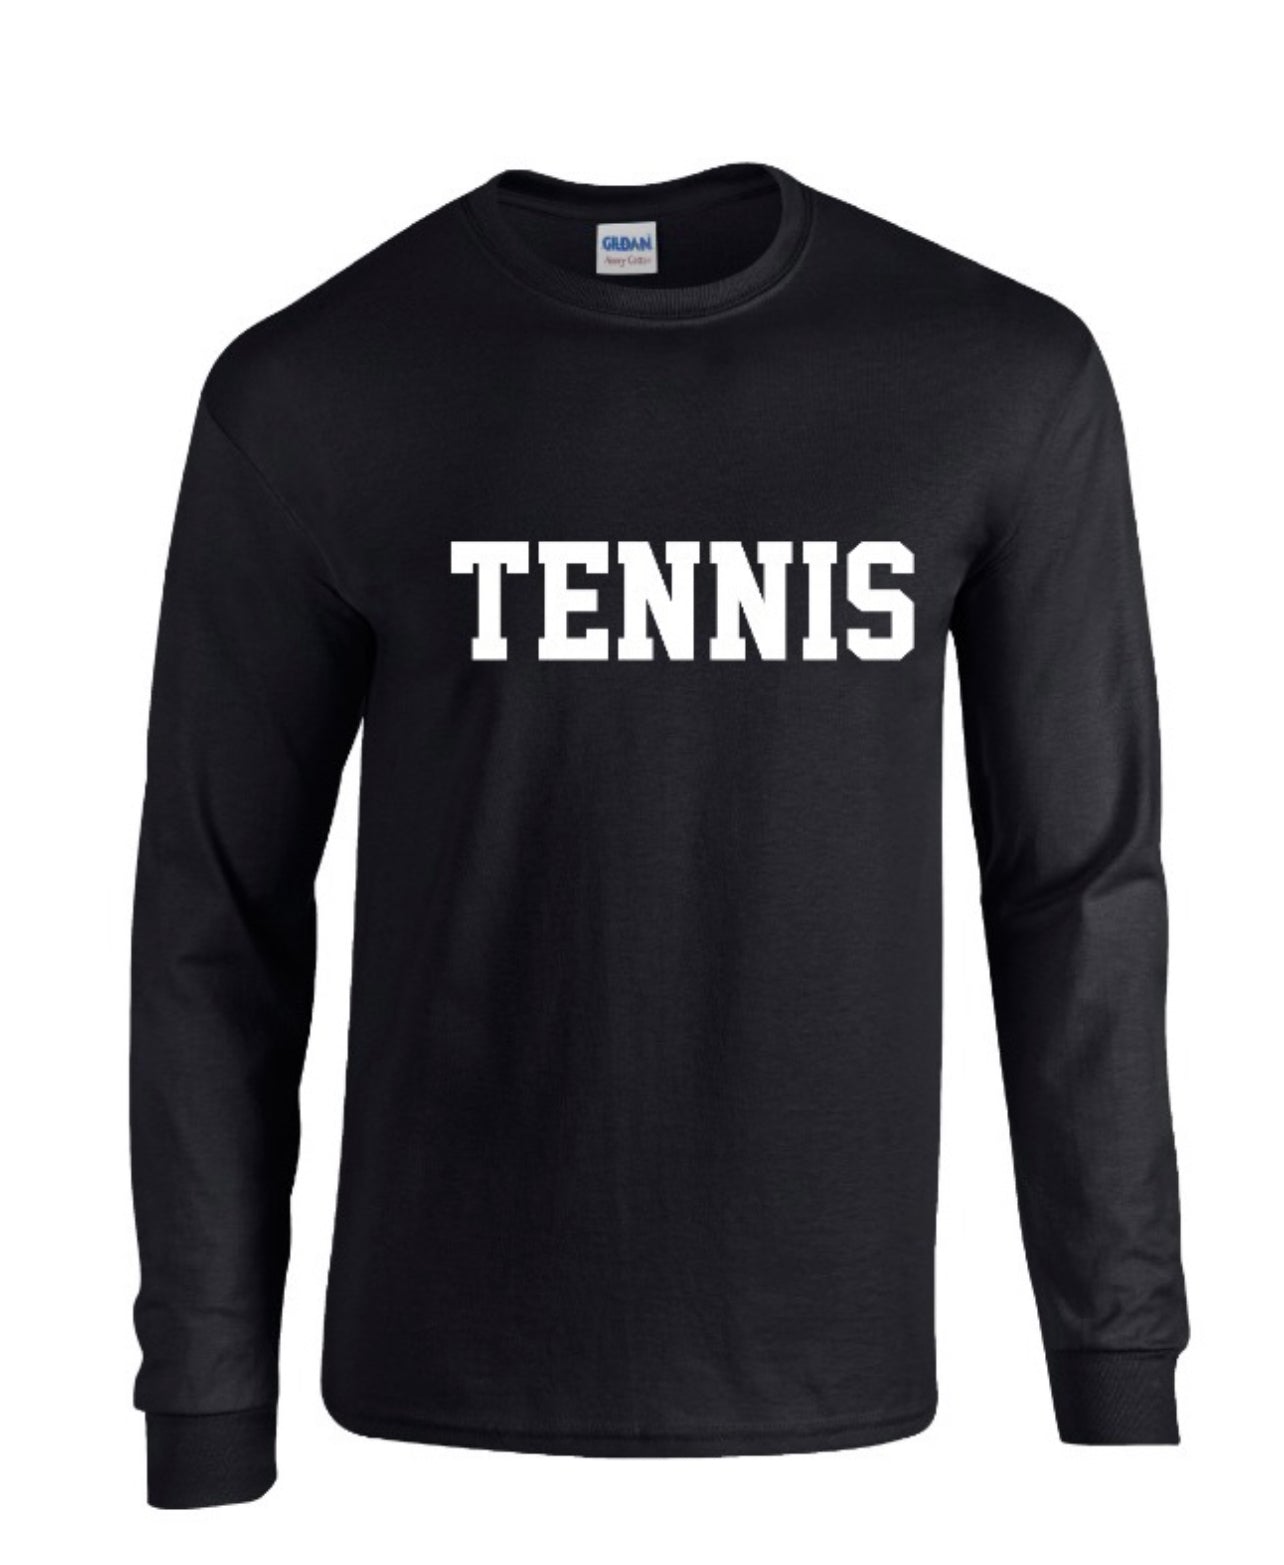 Longsleeve T-shirt TENNIS